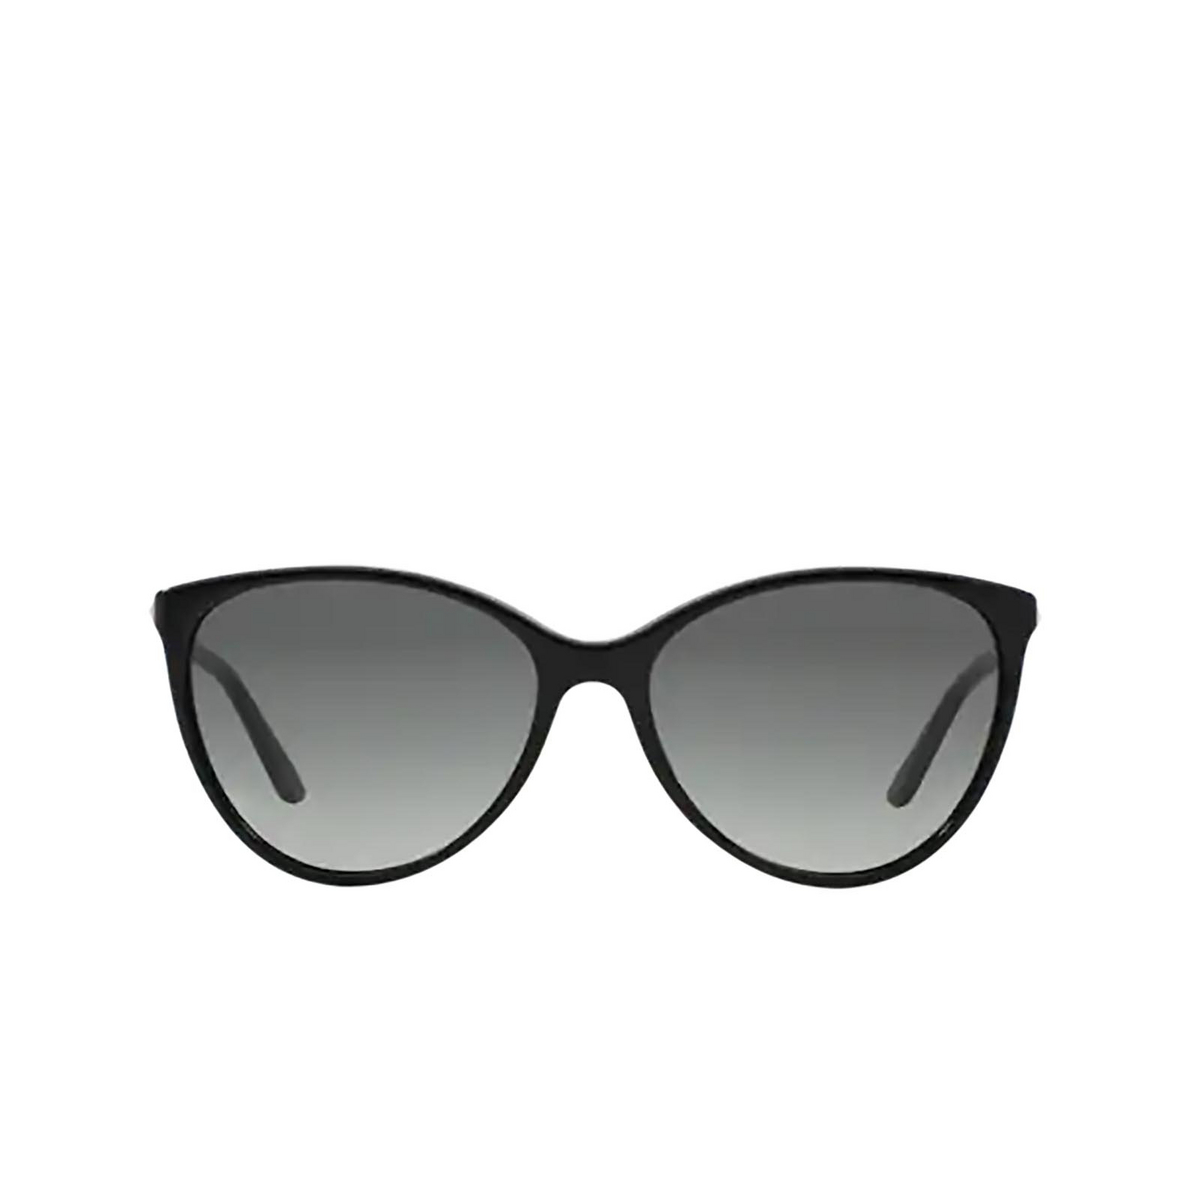 Versace VE4260 Sunglasses GB1/11 Black - front view